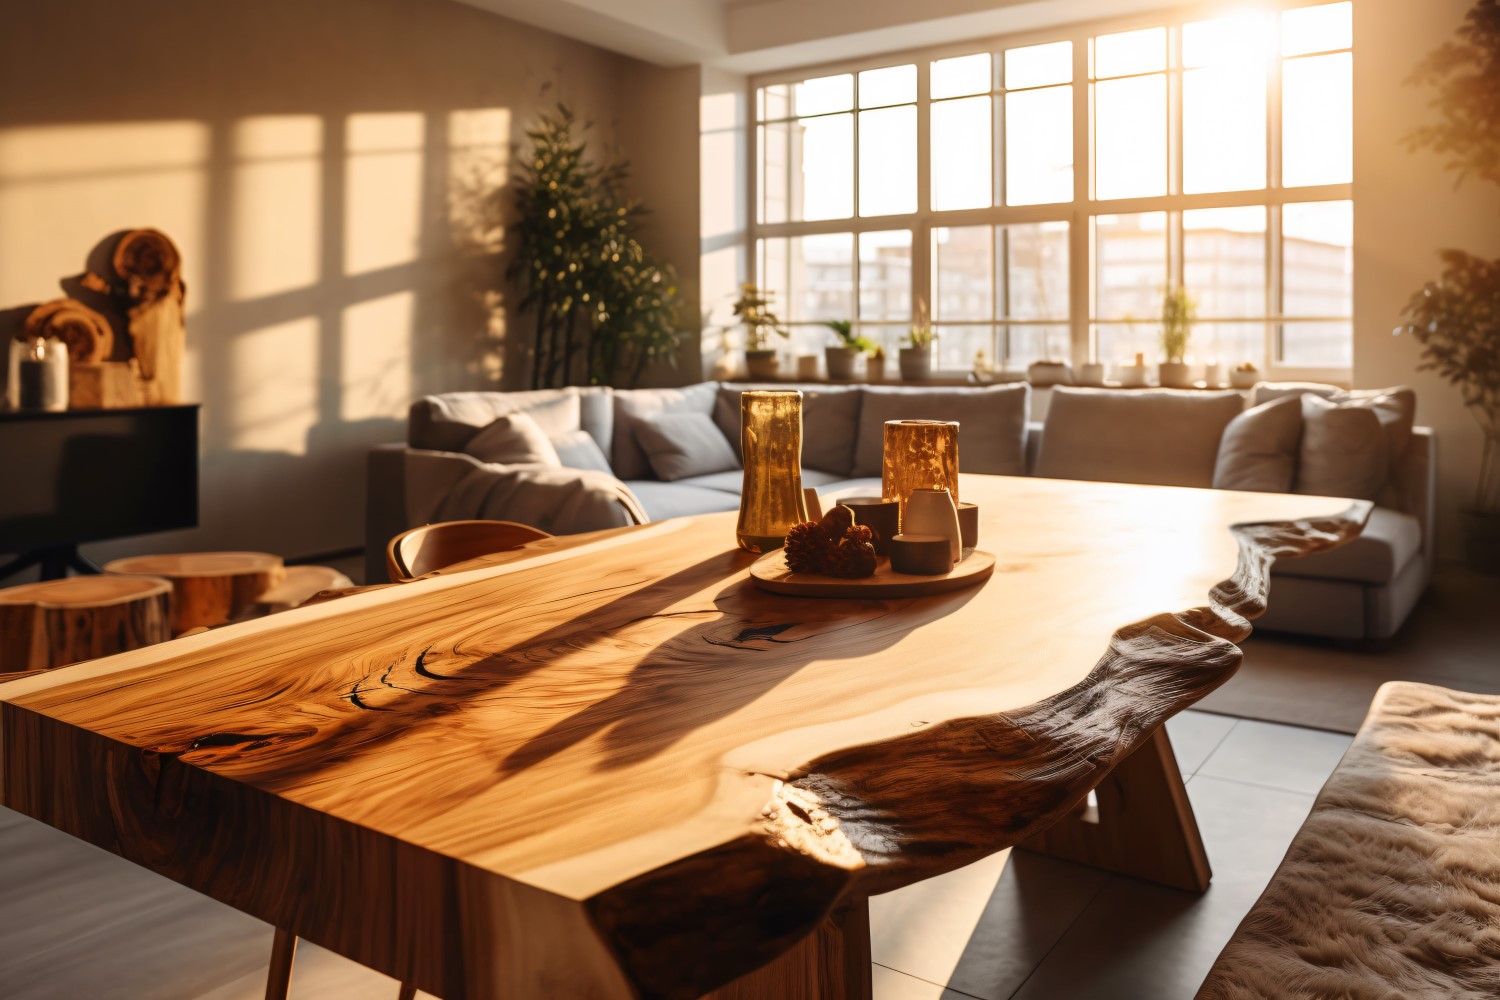 The Art of Italian Living Opulent Living Room Designs 879